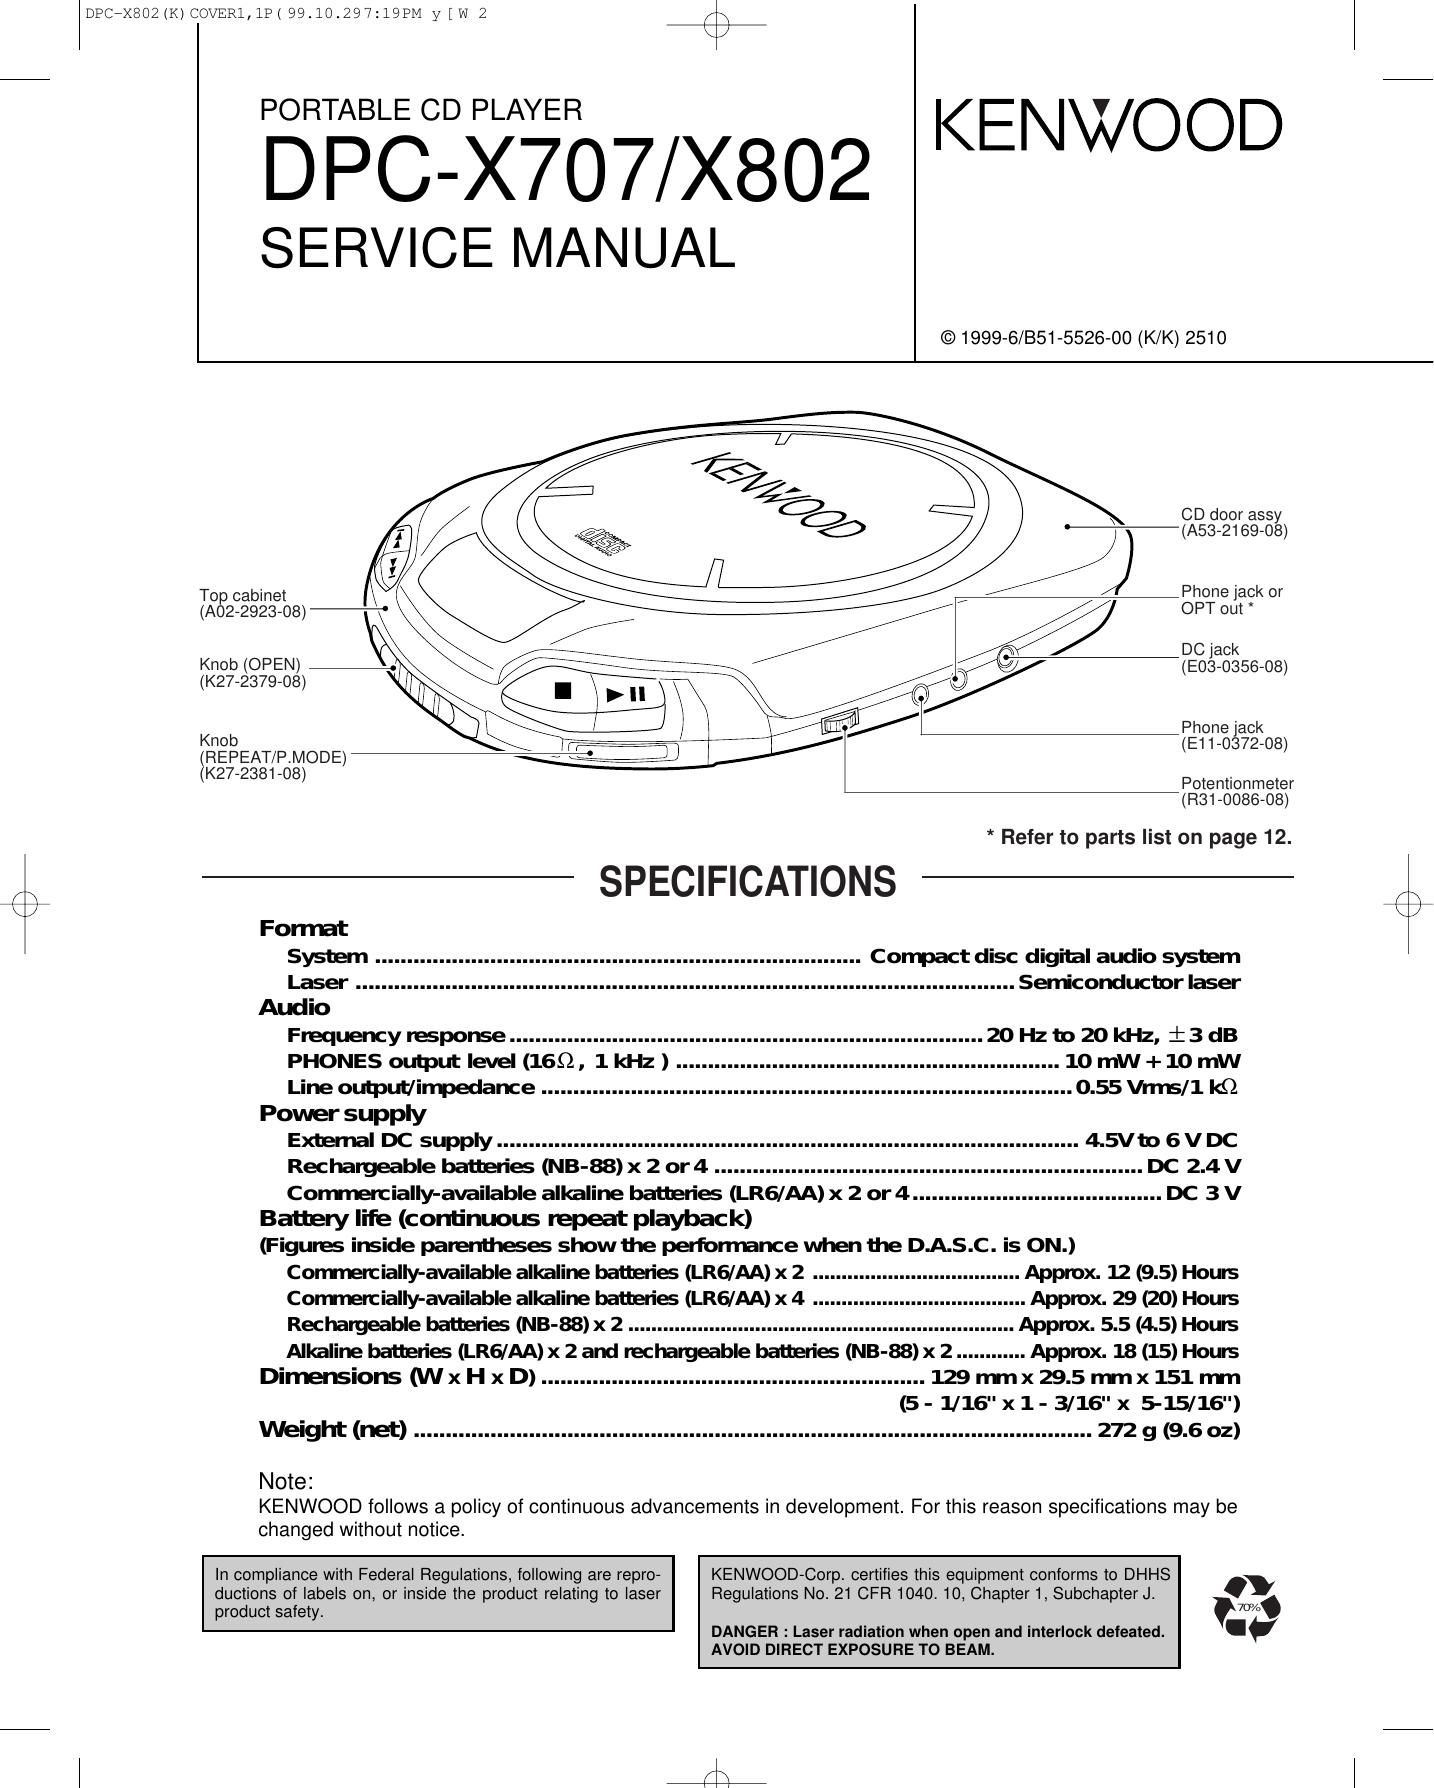 Kenwood DPCX 802 Service Manual